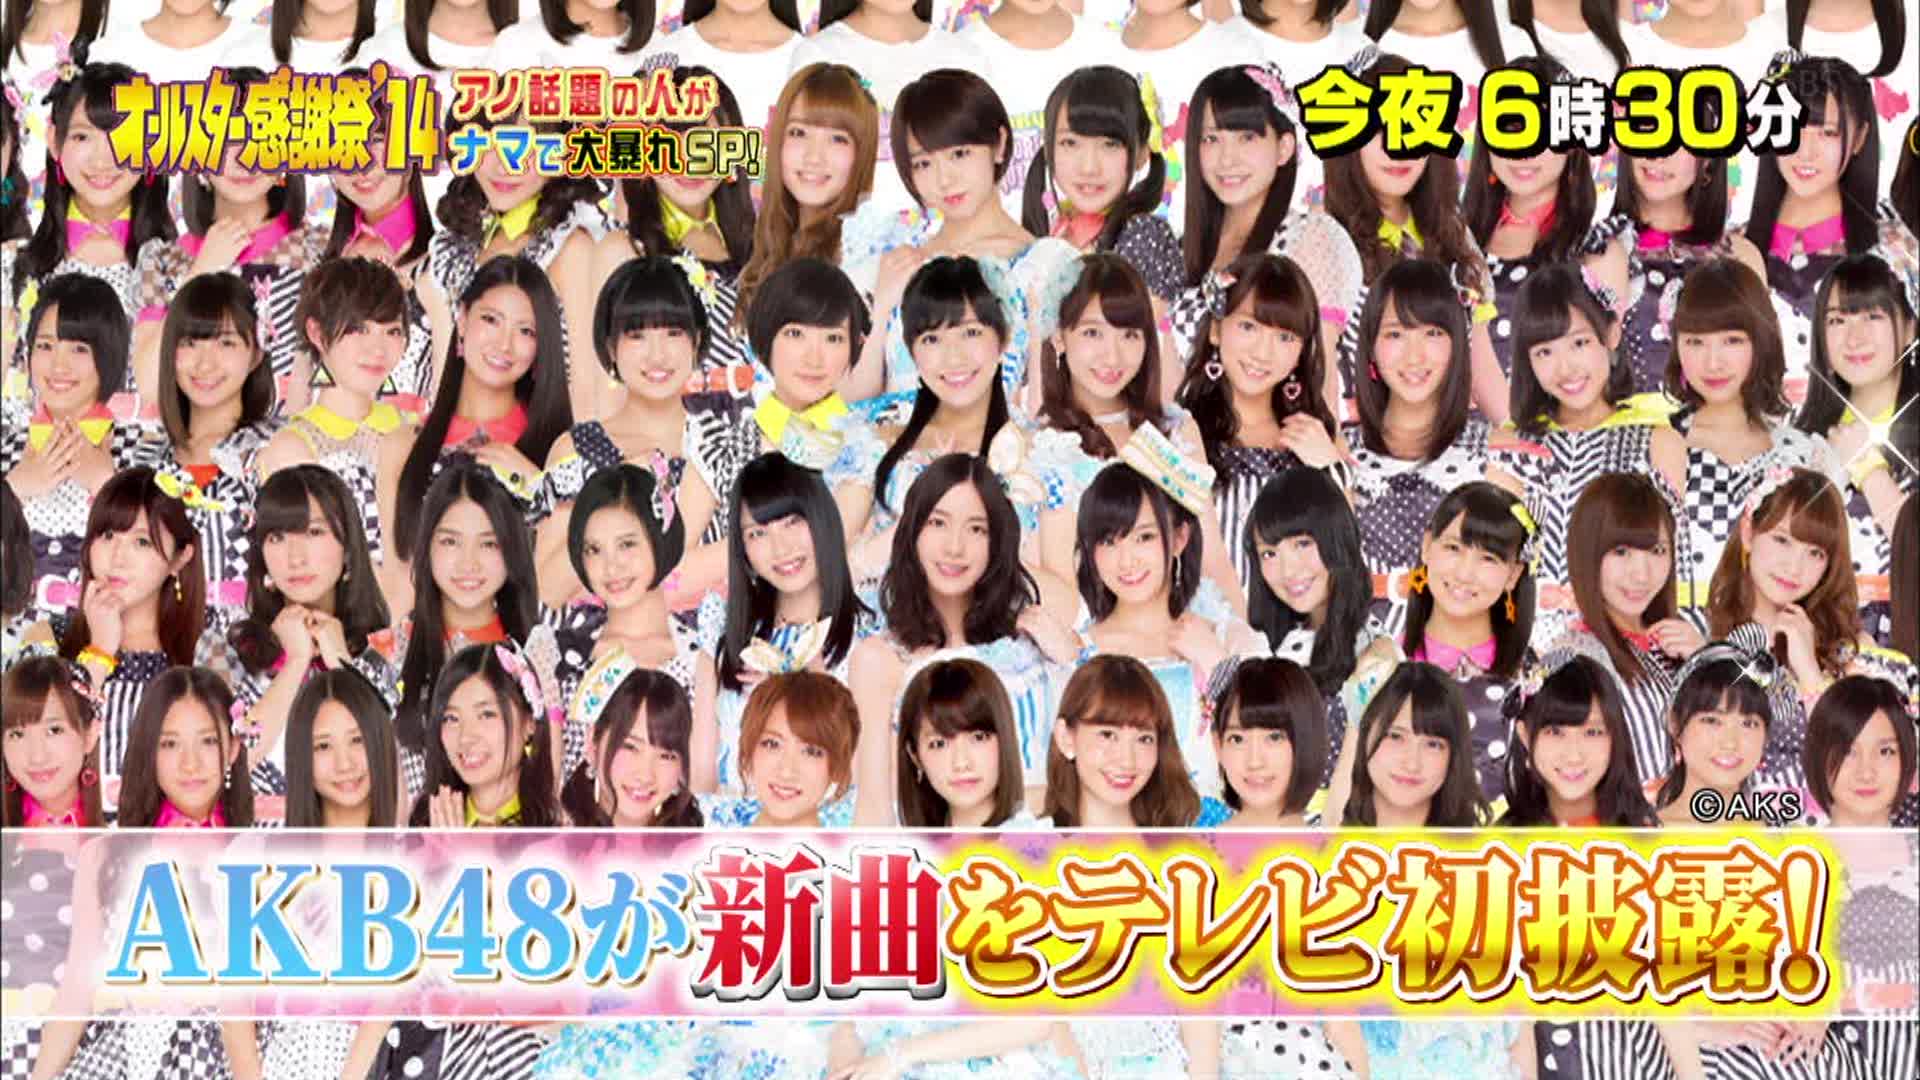 AKB48 38th Single Kibou Teki Refrain All Star Kanshasai